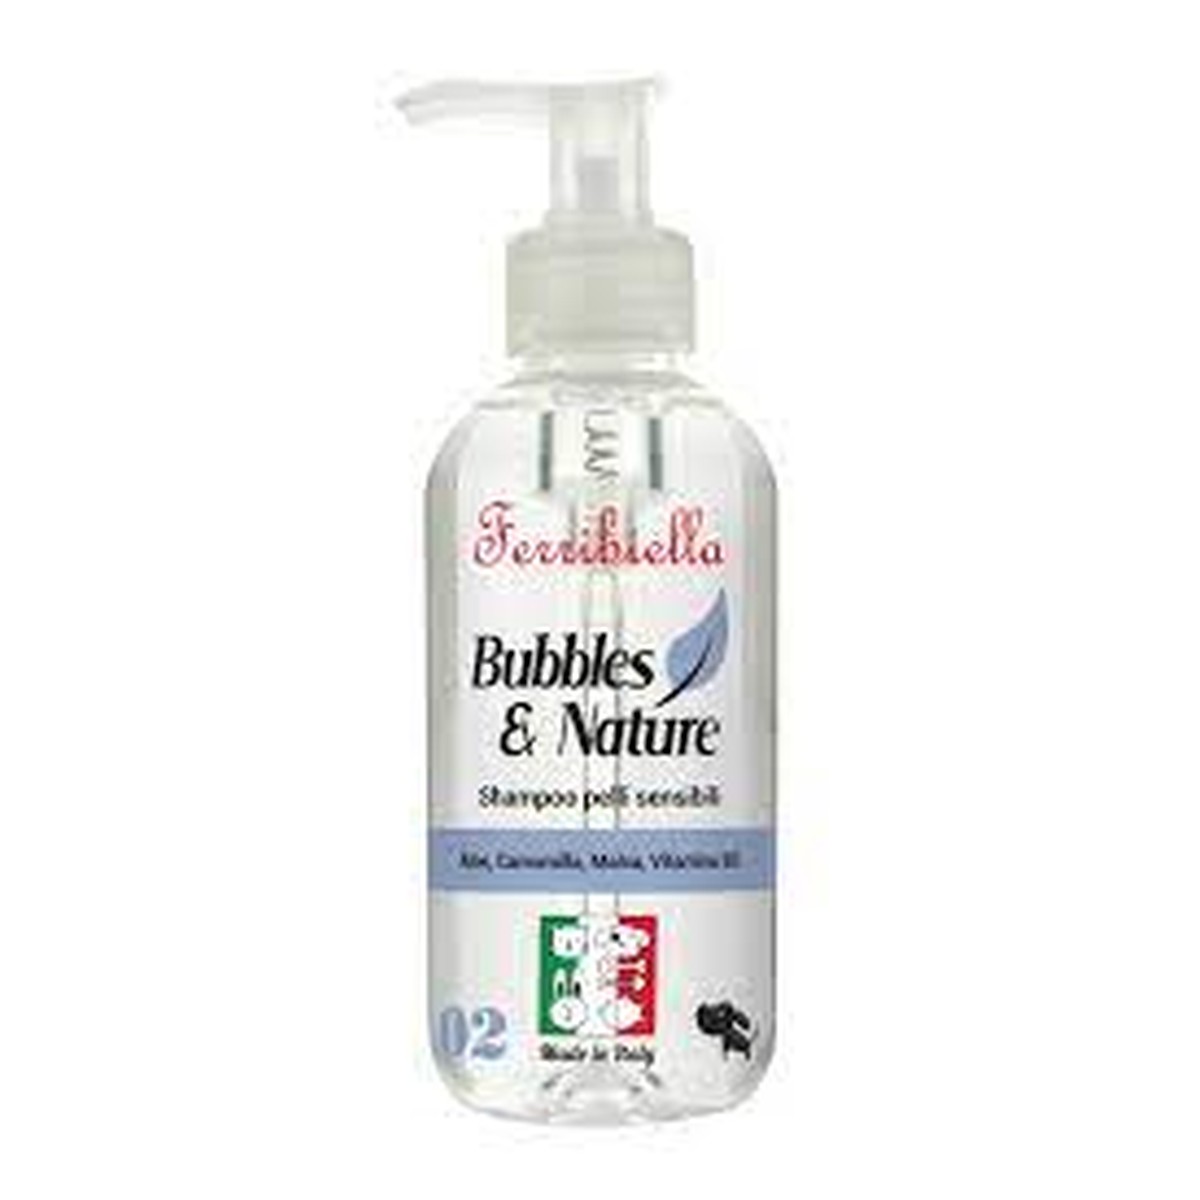 Ferribiella  Shampooing peau sensible Bubbles&nature  250ml